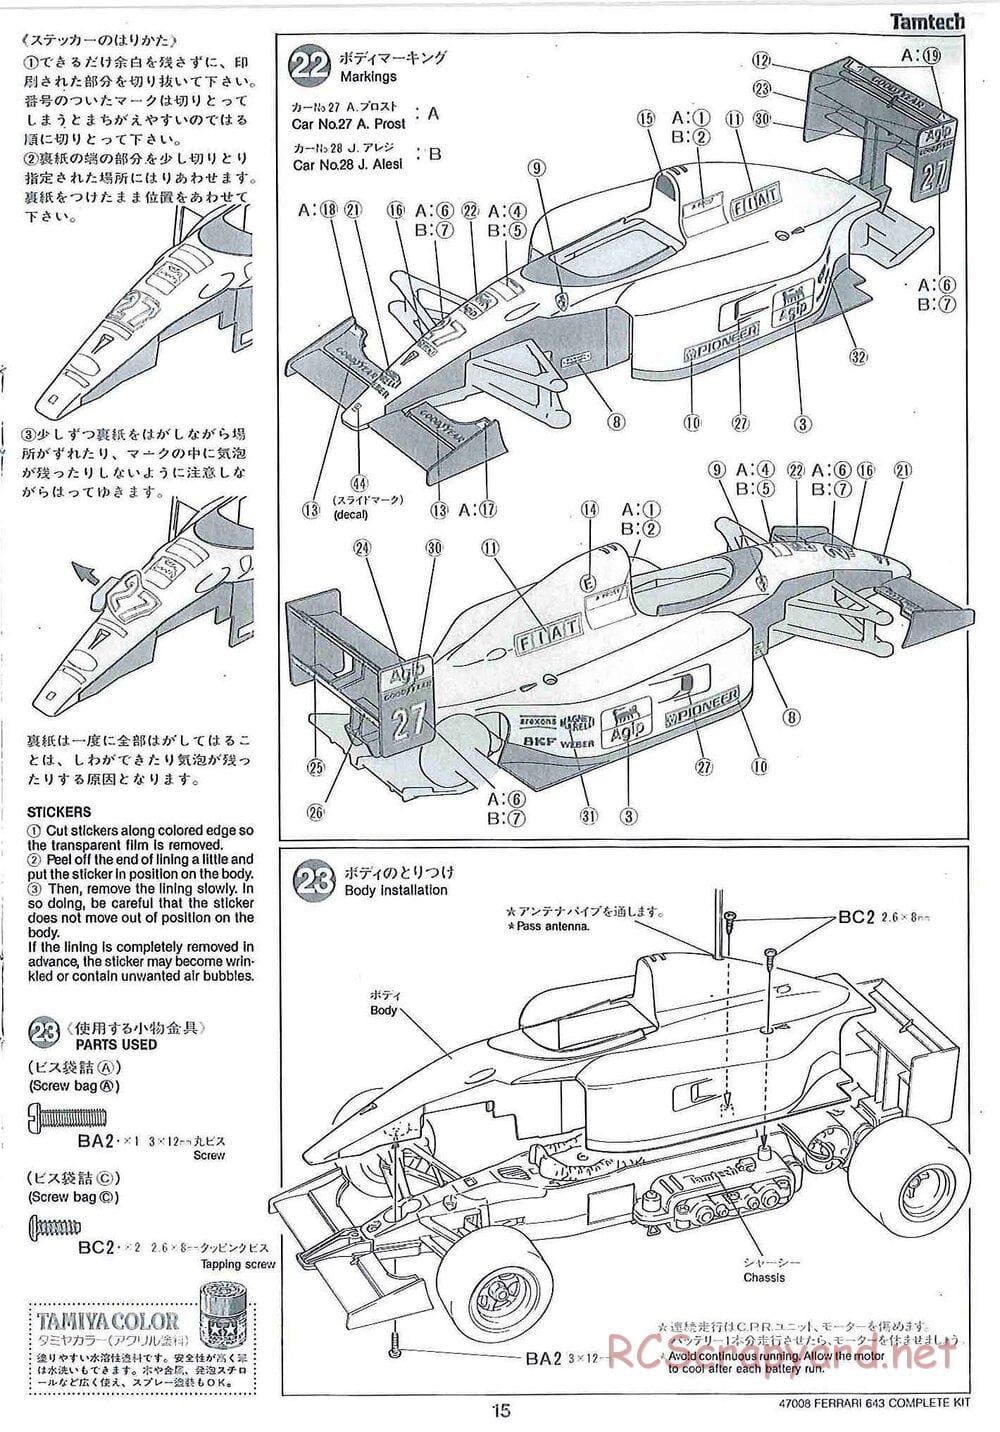 Tamiya - Tamtech - Ferrari 643 Chassis - Manual - Page 15